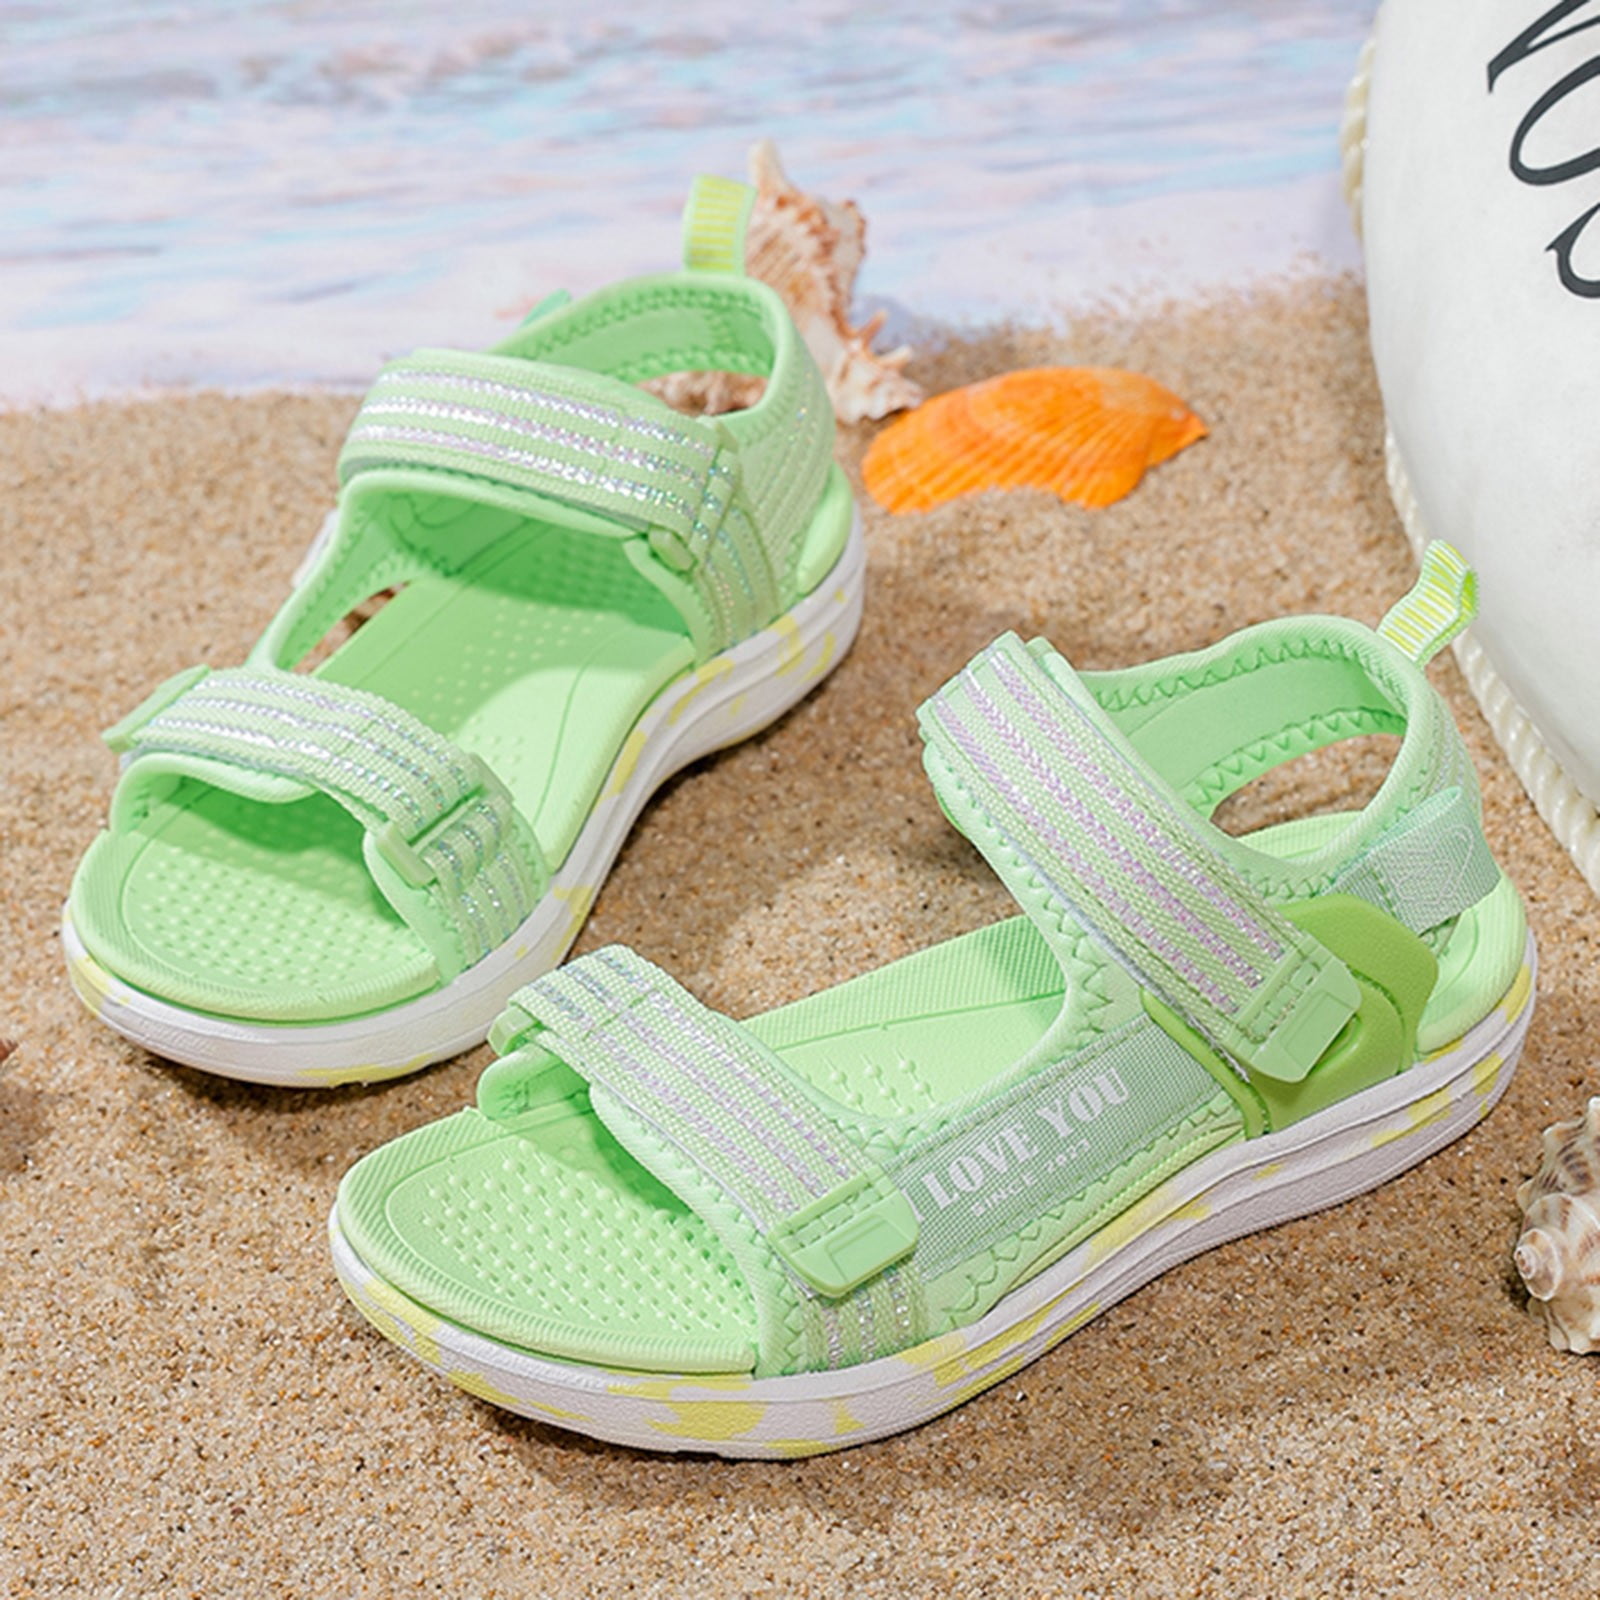 Green Girls Sandals Children Shoes Fashion Beach Sandals Light Soft ...